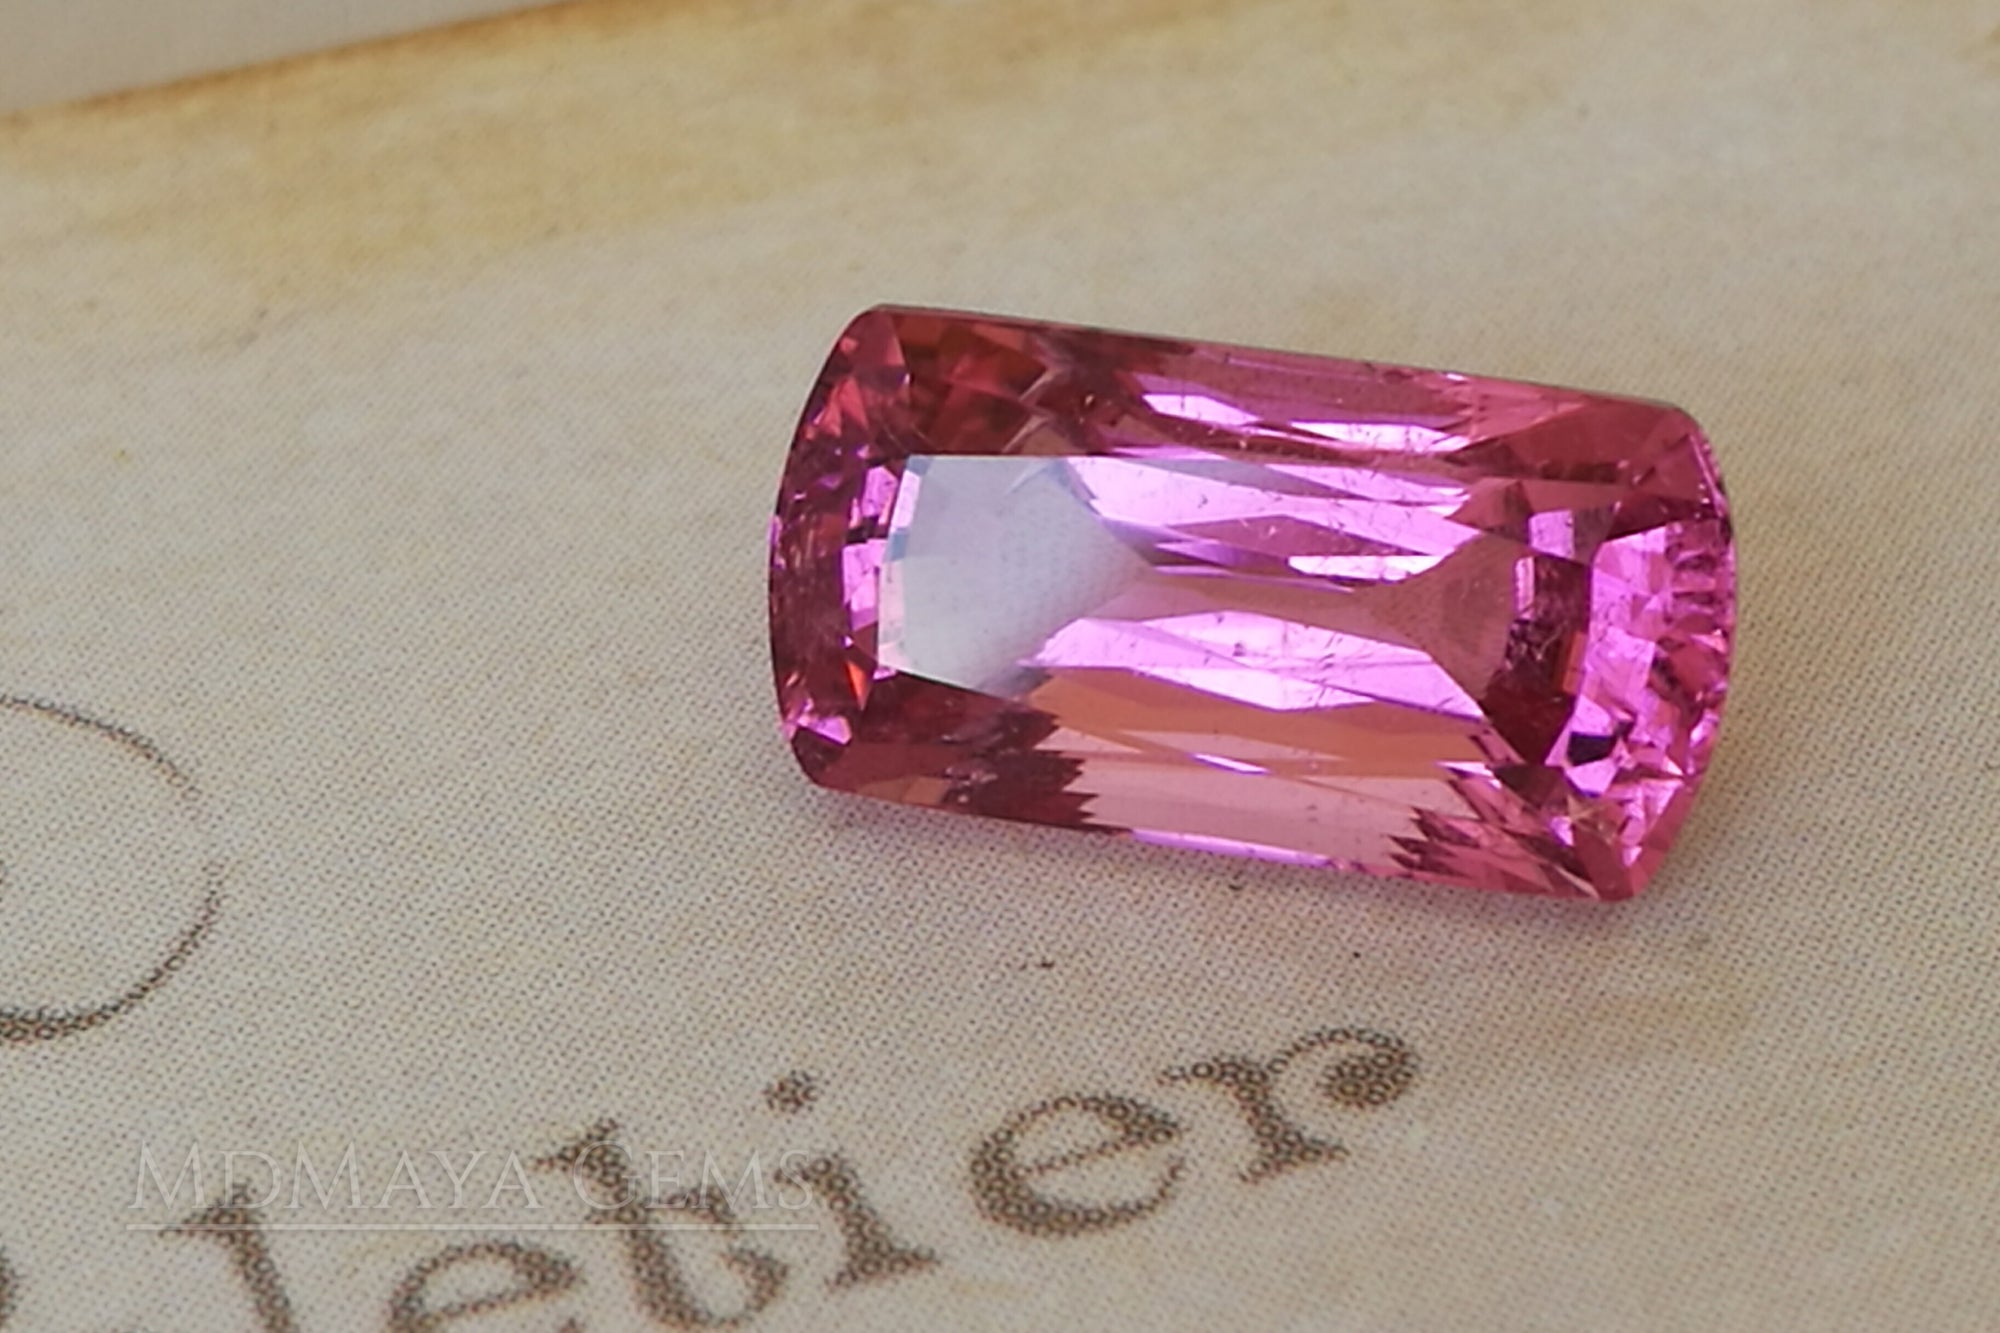 Hot Pink Tourmaline Gemstone Fancy Cut 3.07 ct